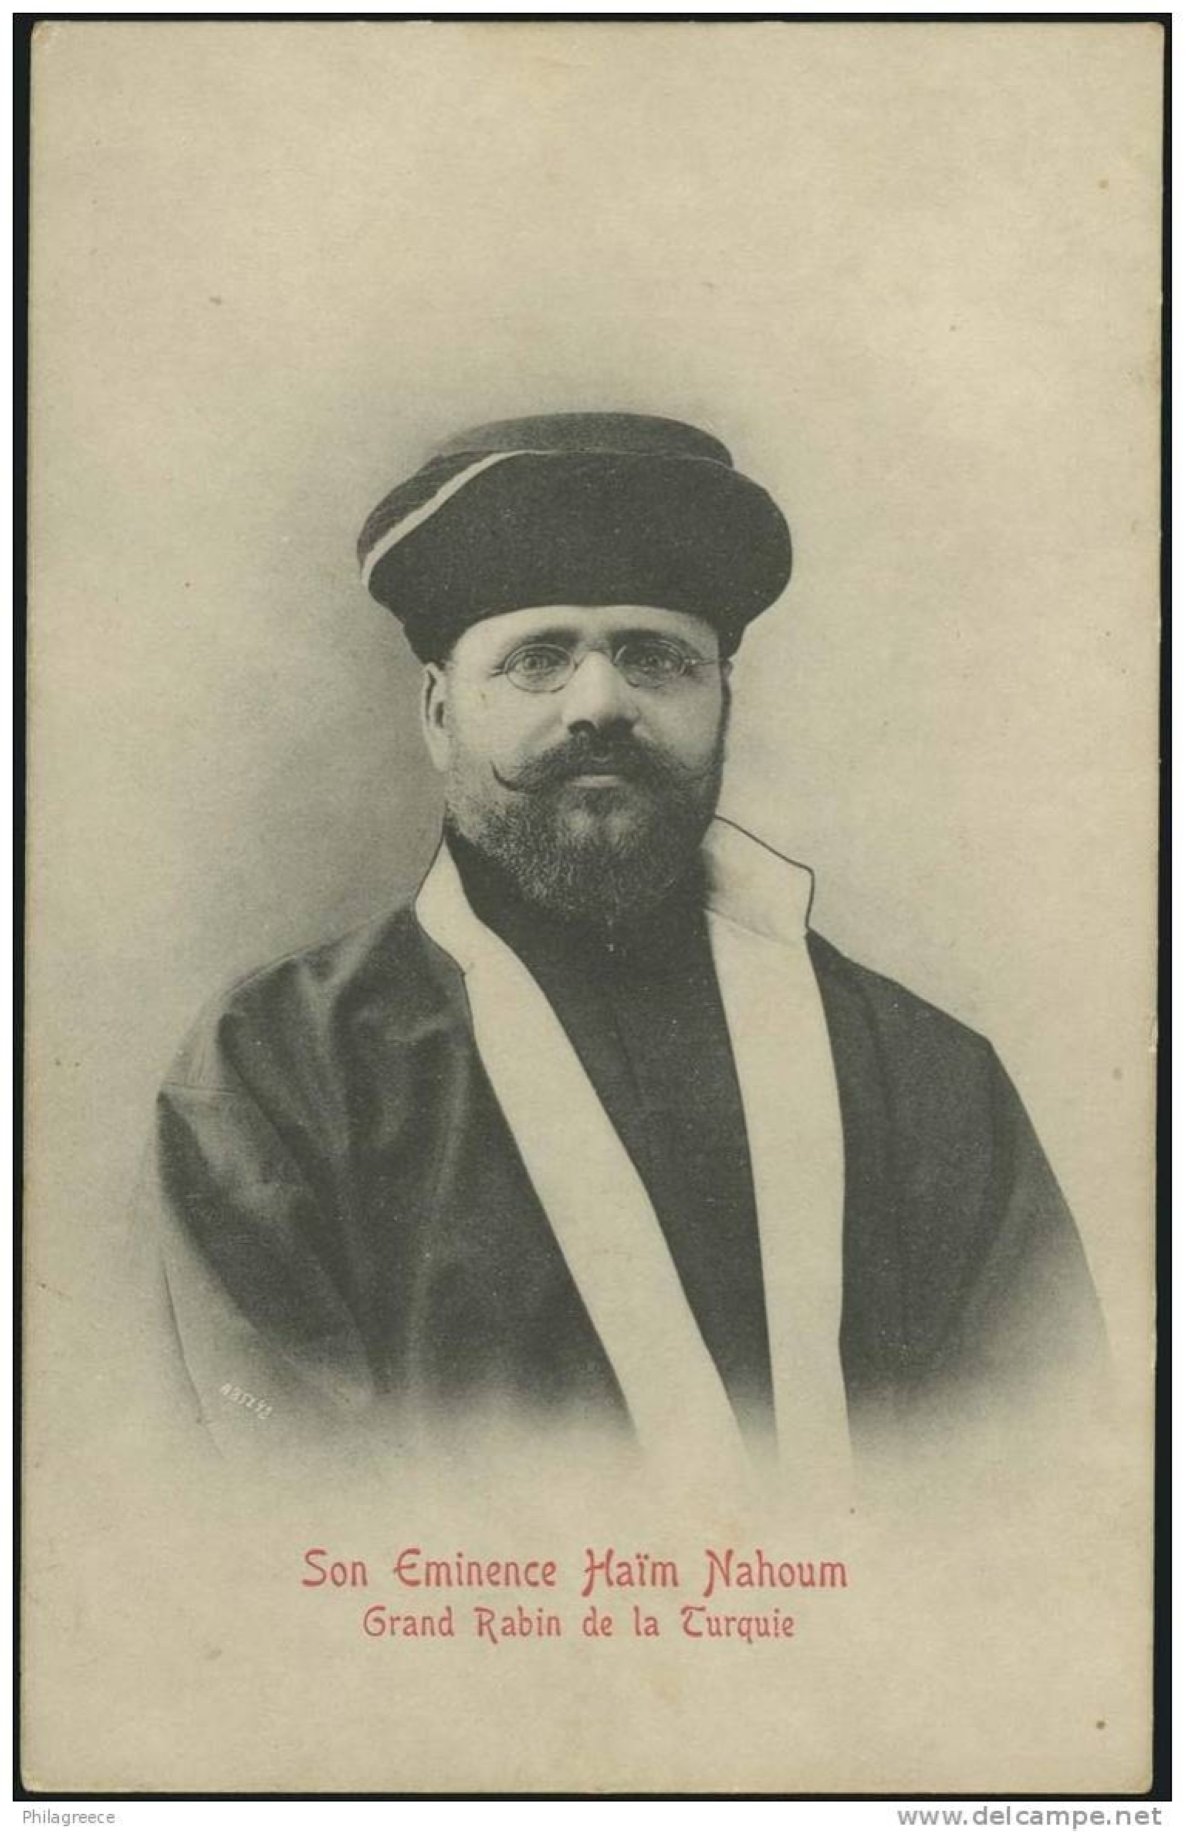 Chaim Nahum as the chief rabbi of the Ottoman Empire on an Ottoman postcard. (Wikimedia)